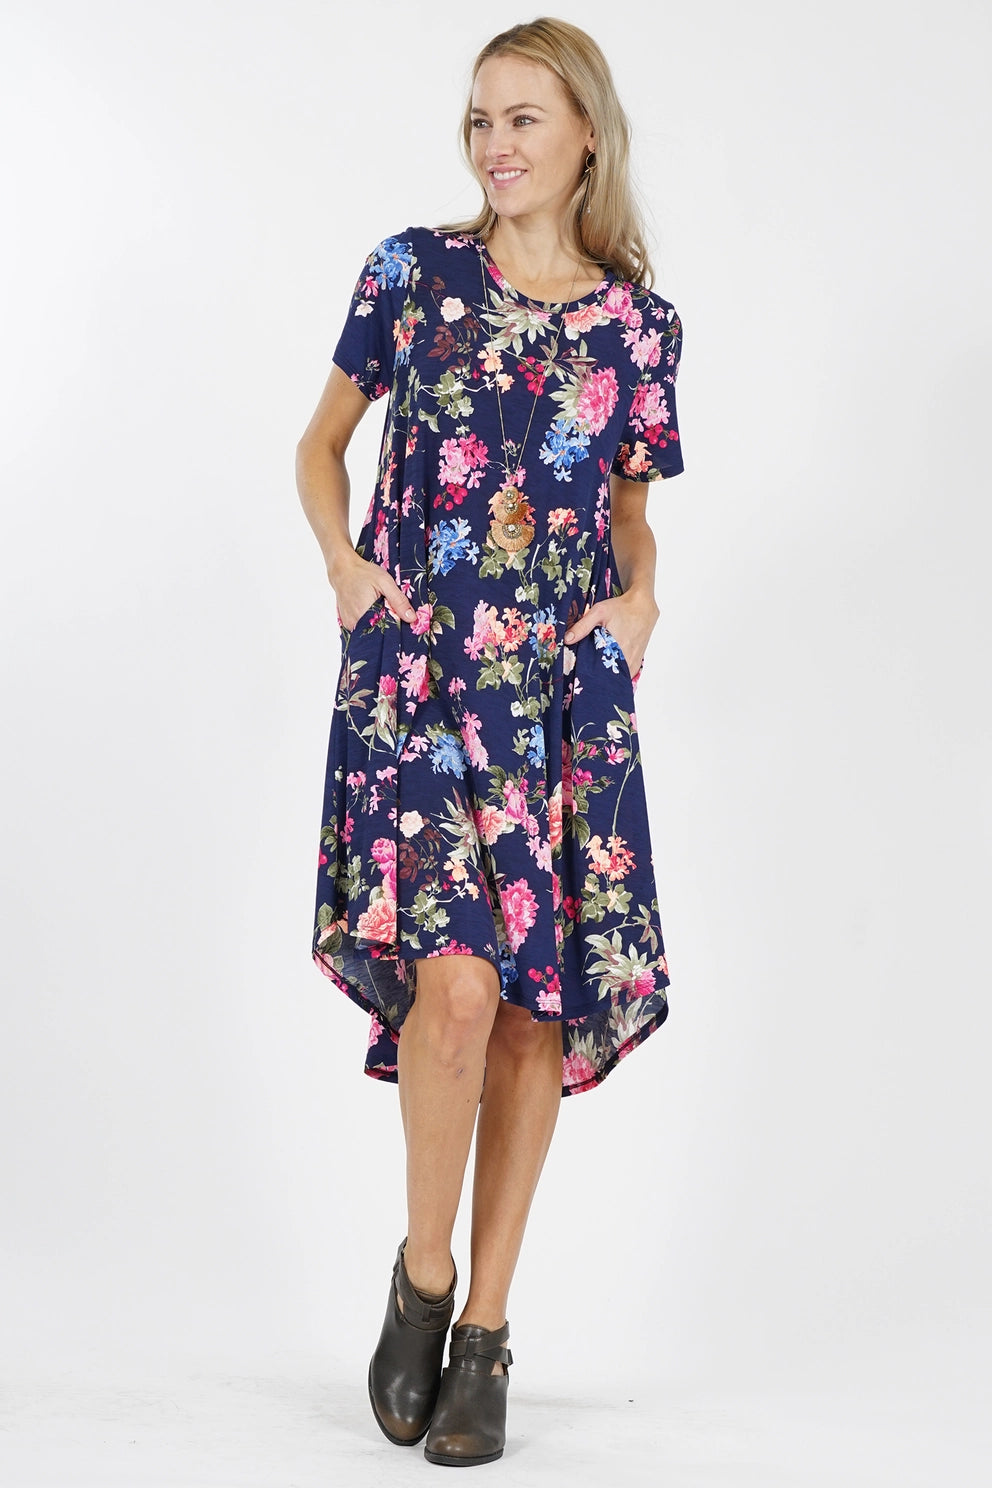 Floral Print Side Pocket Hi-Low Swing Dress - Mulberry Skies